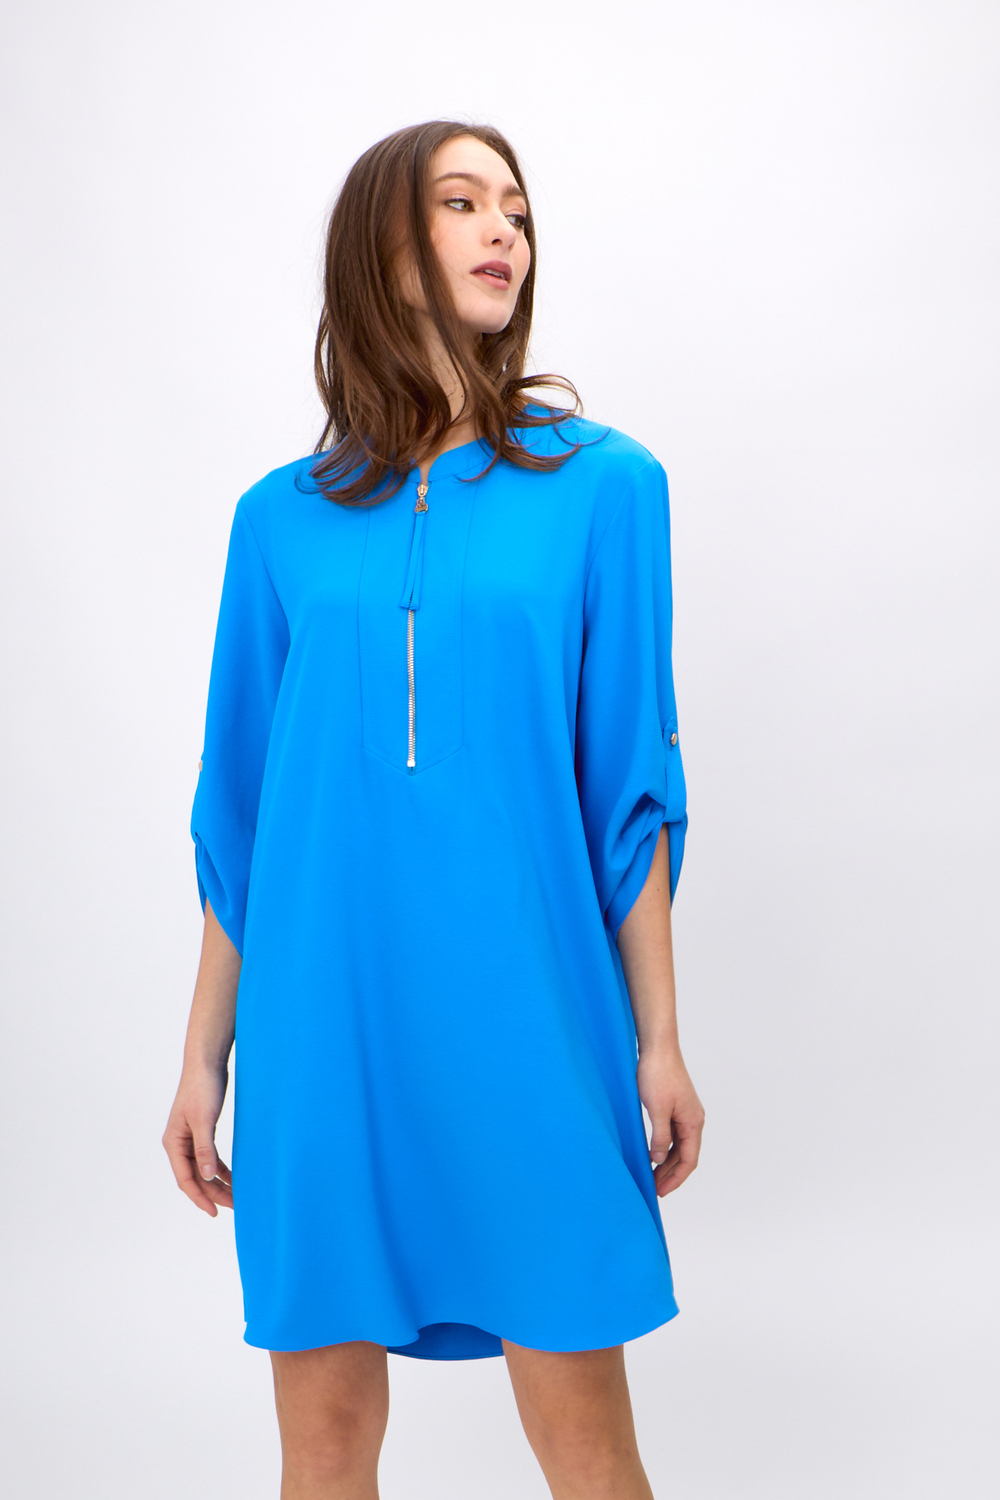 Decorative Zip Dress Style 232201. French Blue